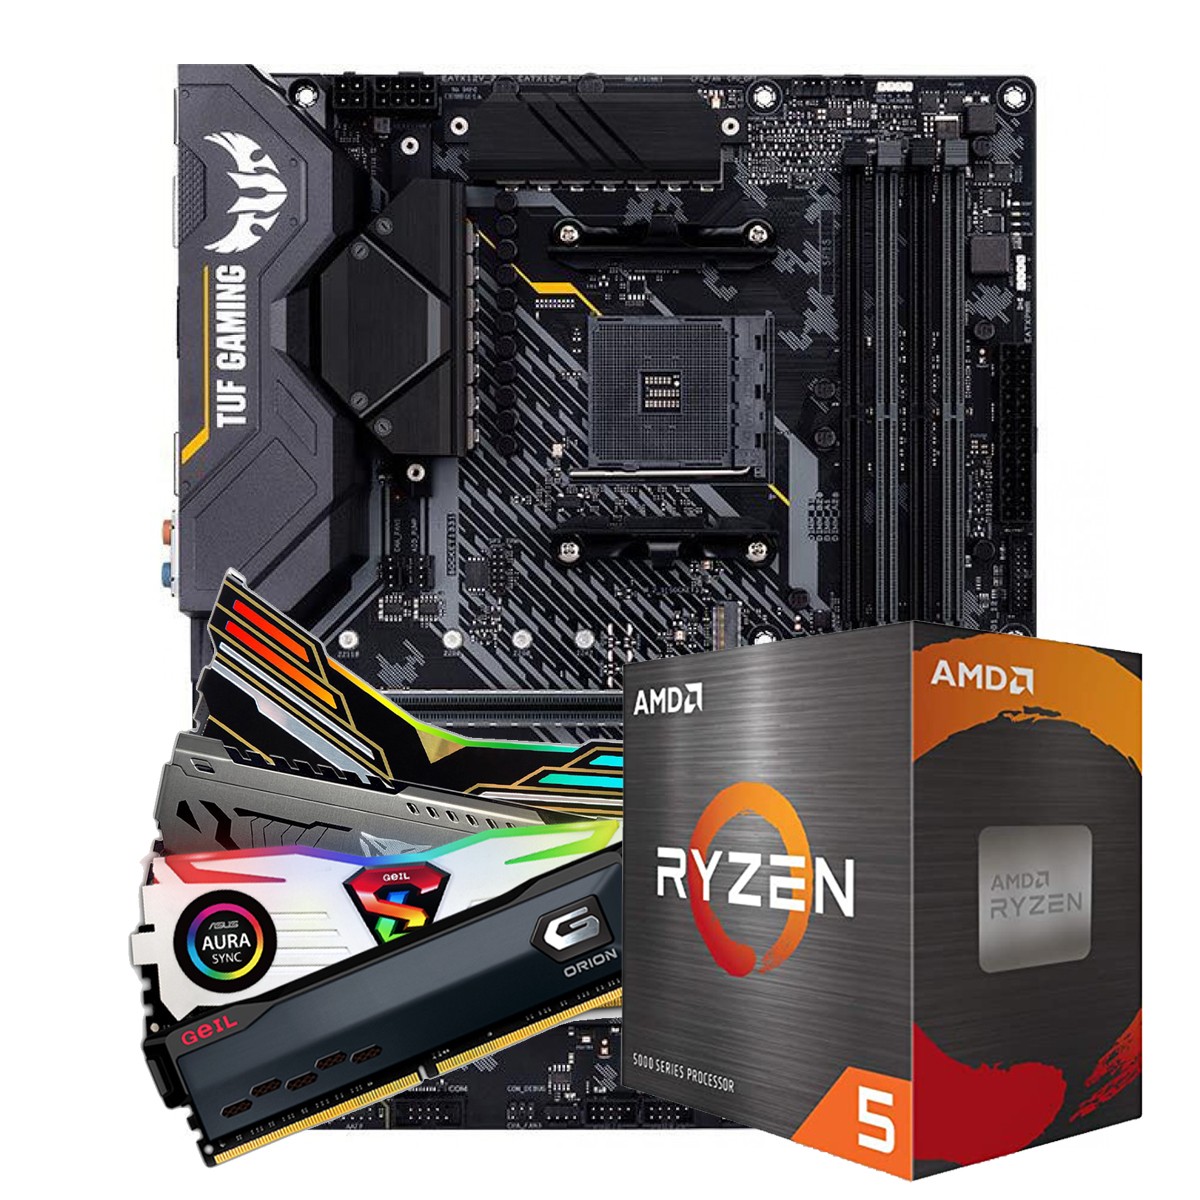  Kit Upgrade, ASUS TUF Gaming X570-PLUS + AMD Ryzen 5 5600G + Memória DDR4, 8GB/3000MHz